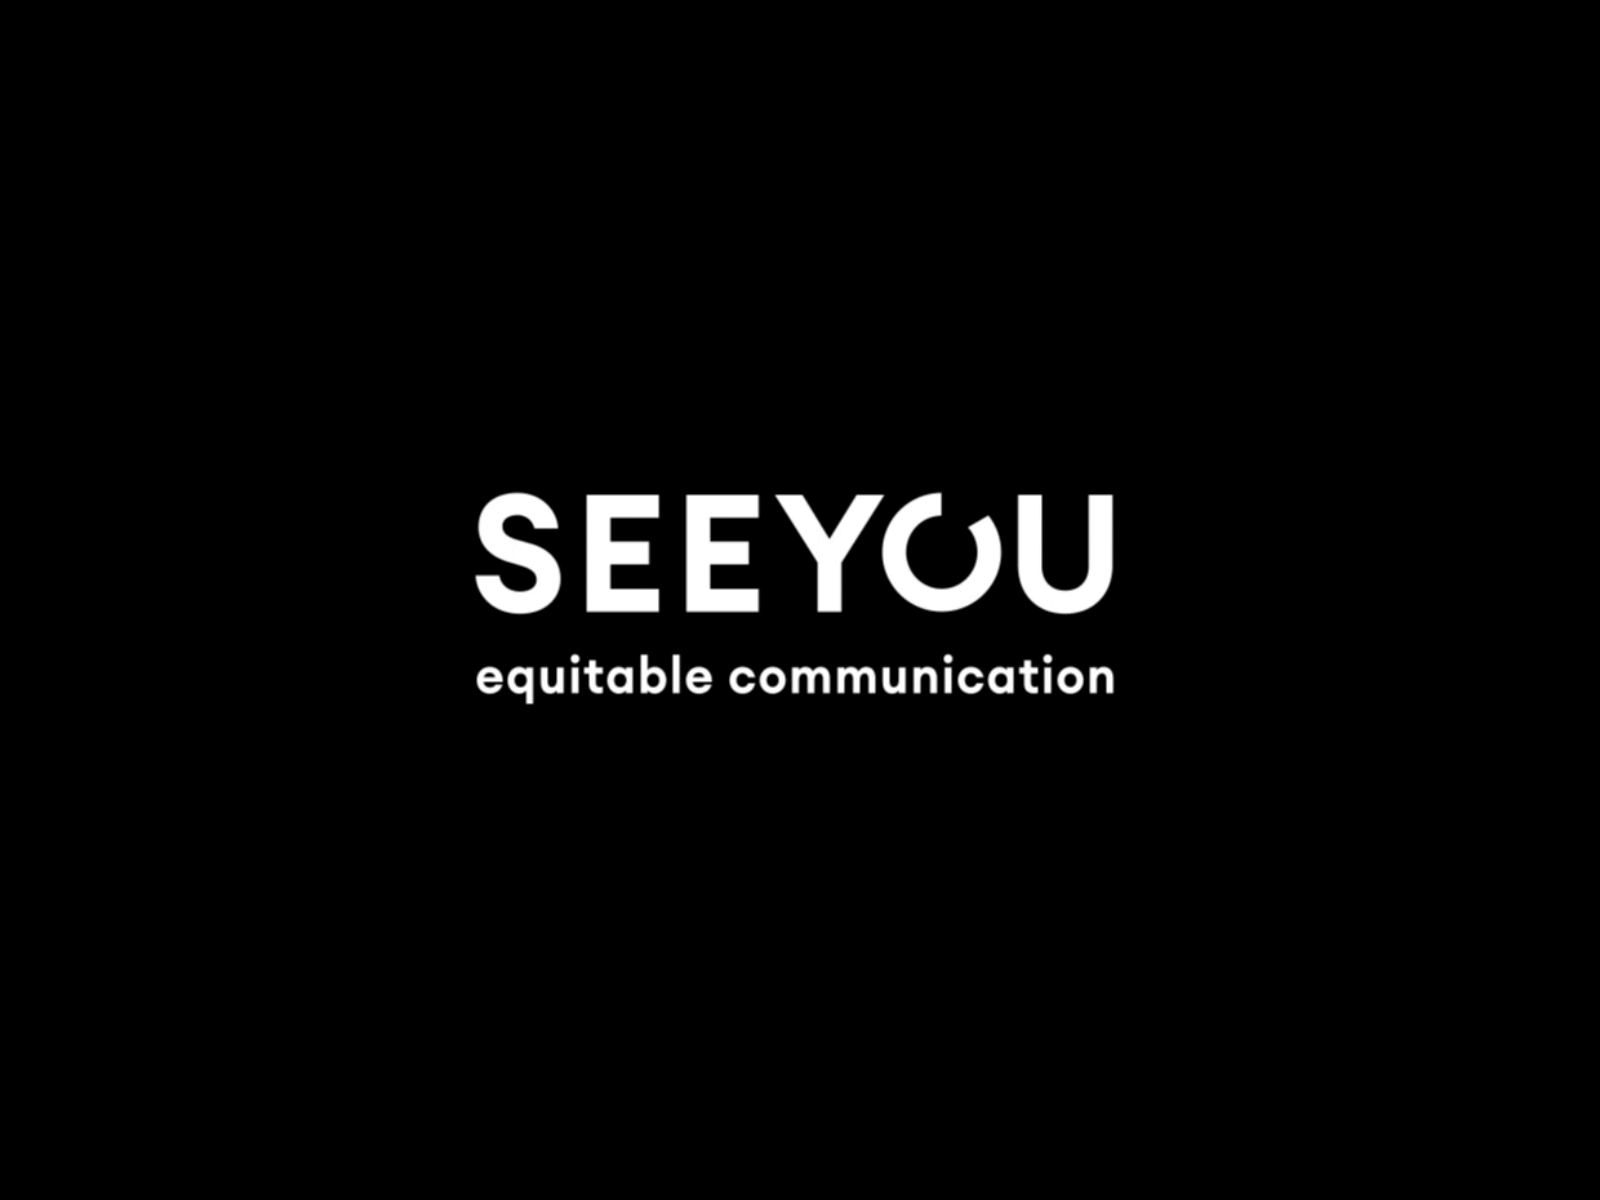 SEEYOU logo animation